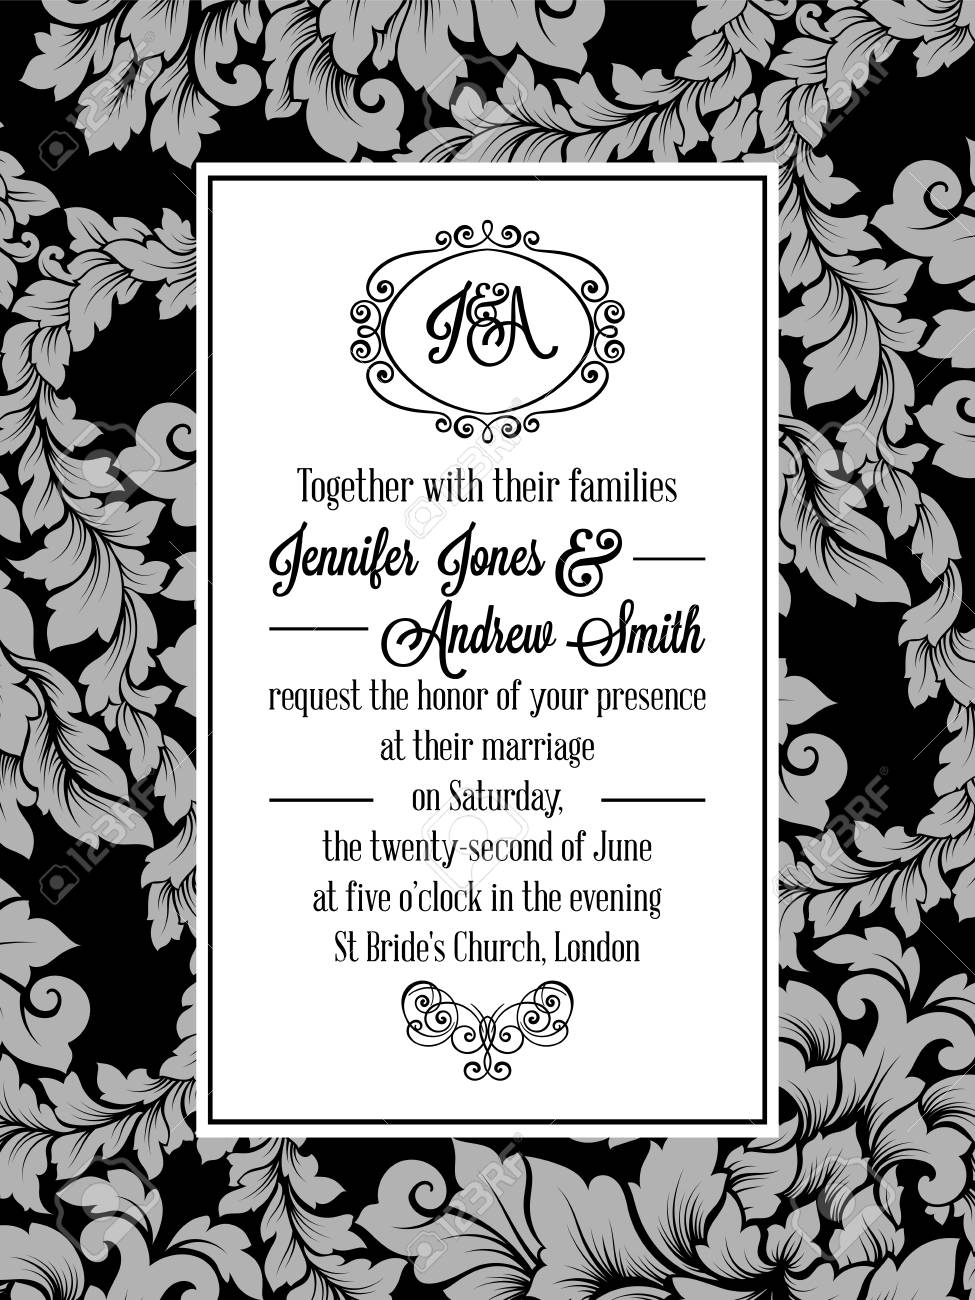 Damask Wedding Invitations Damask Pattern Design For Wedding Invitation In Black And White